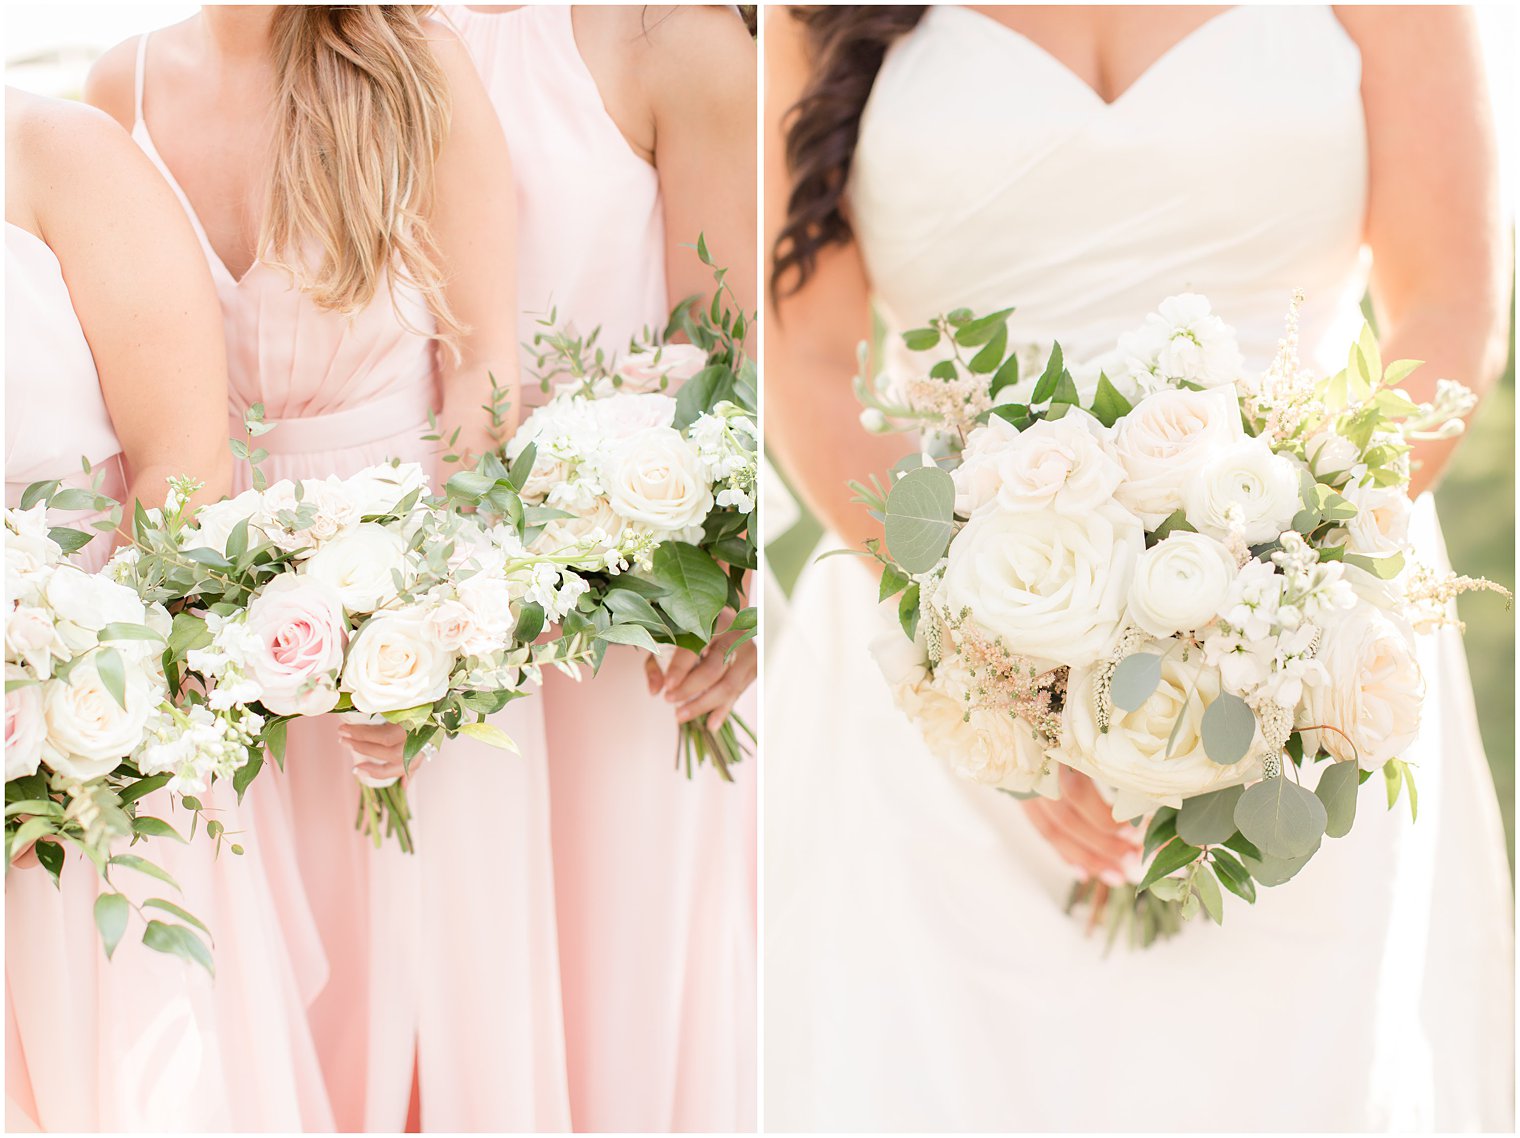 Organic bridal bouquets by Laurelwood Designs